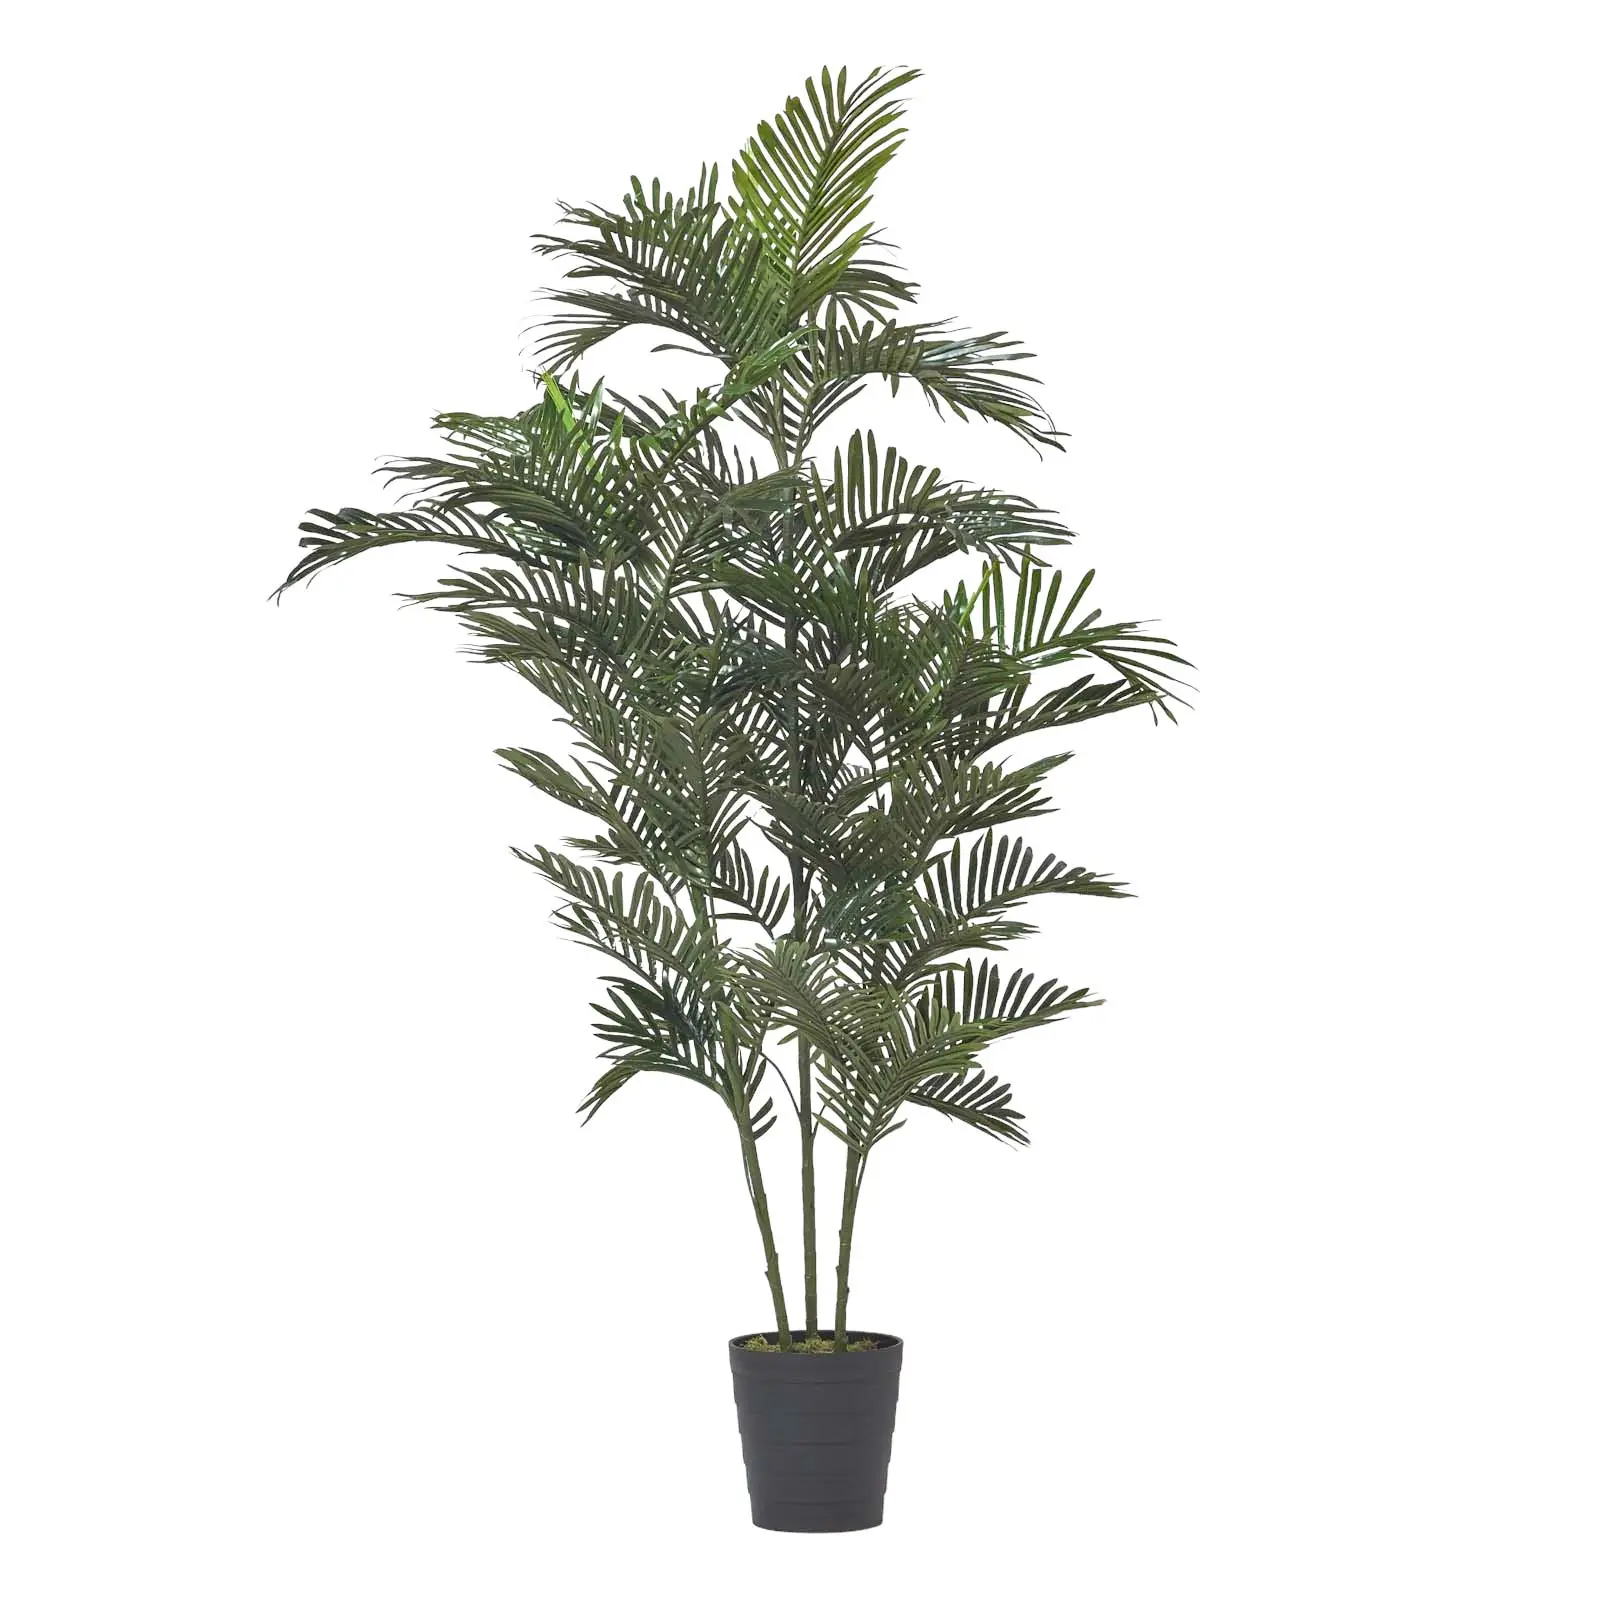 K眉nstliche Areca-Palme im Topf | Kunstpflanzen